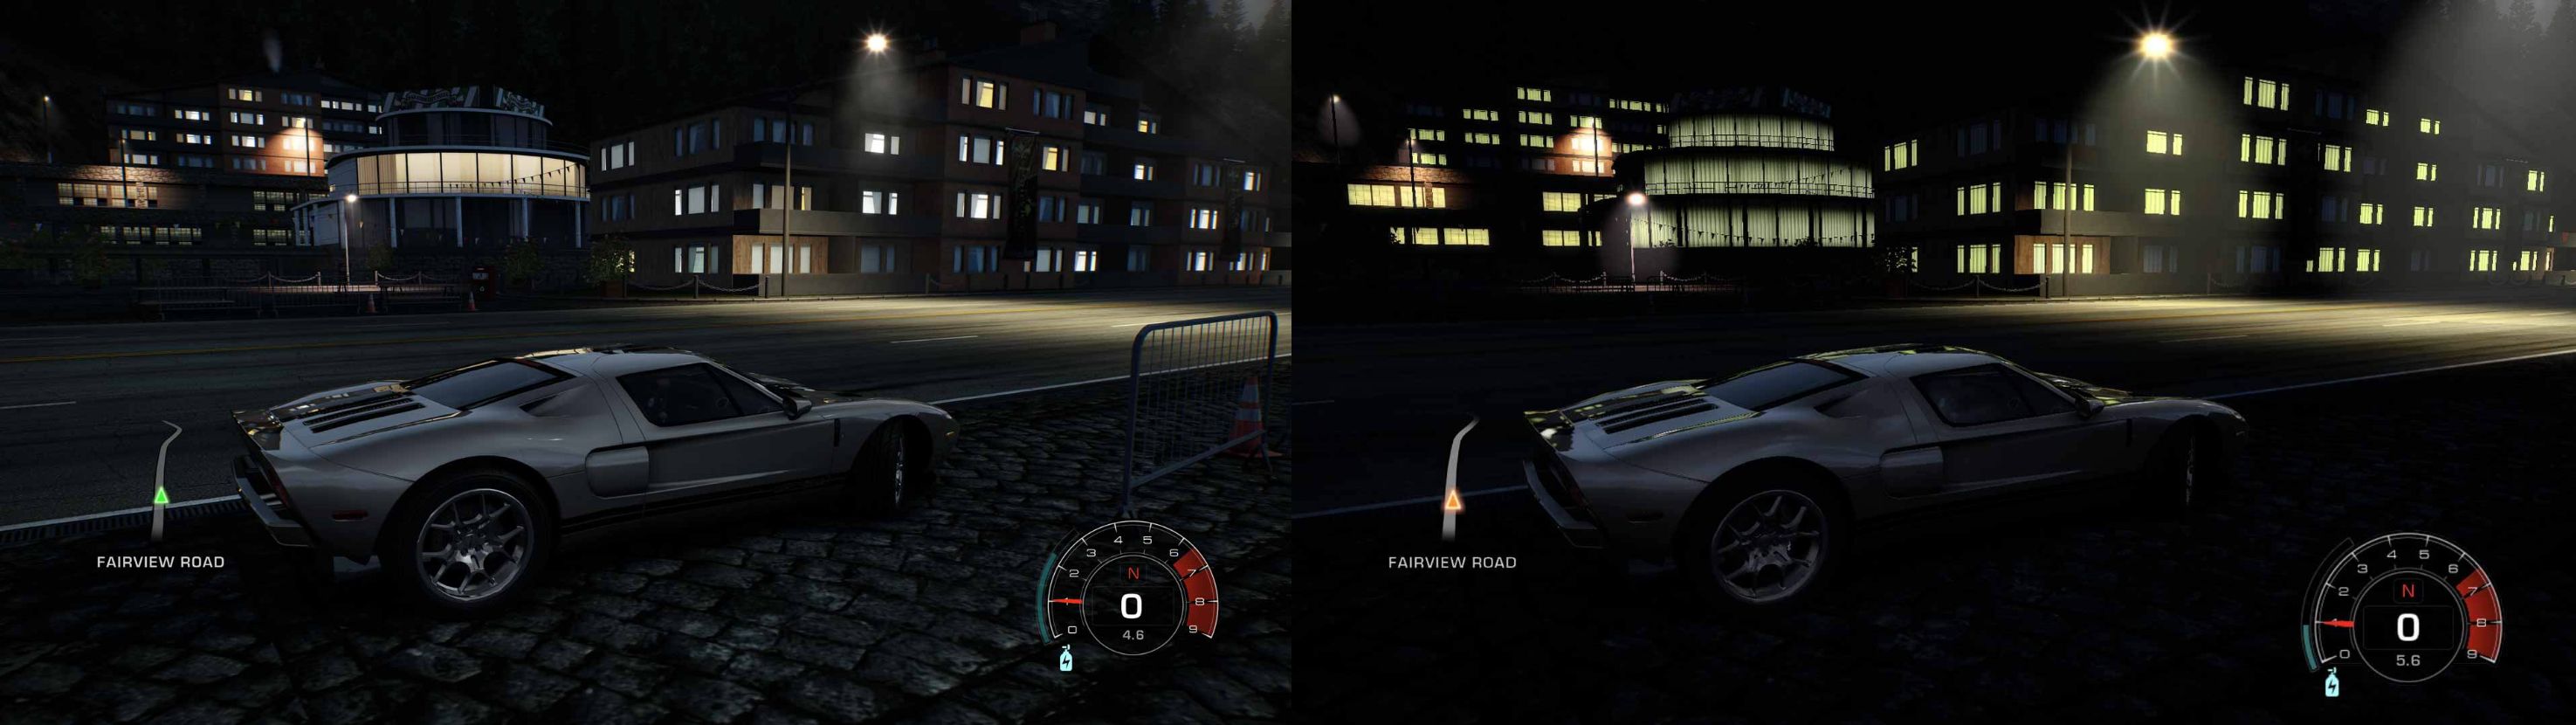 n4s hot pursuit set 2 screenshots